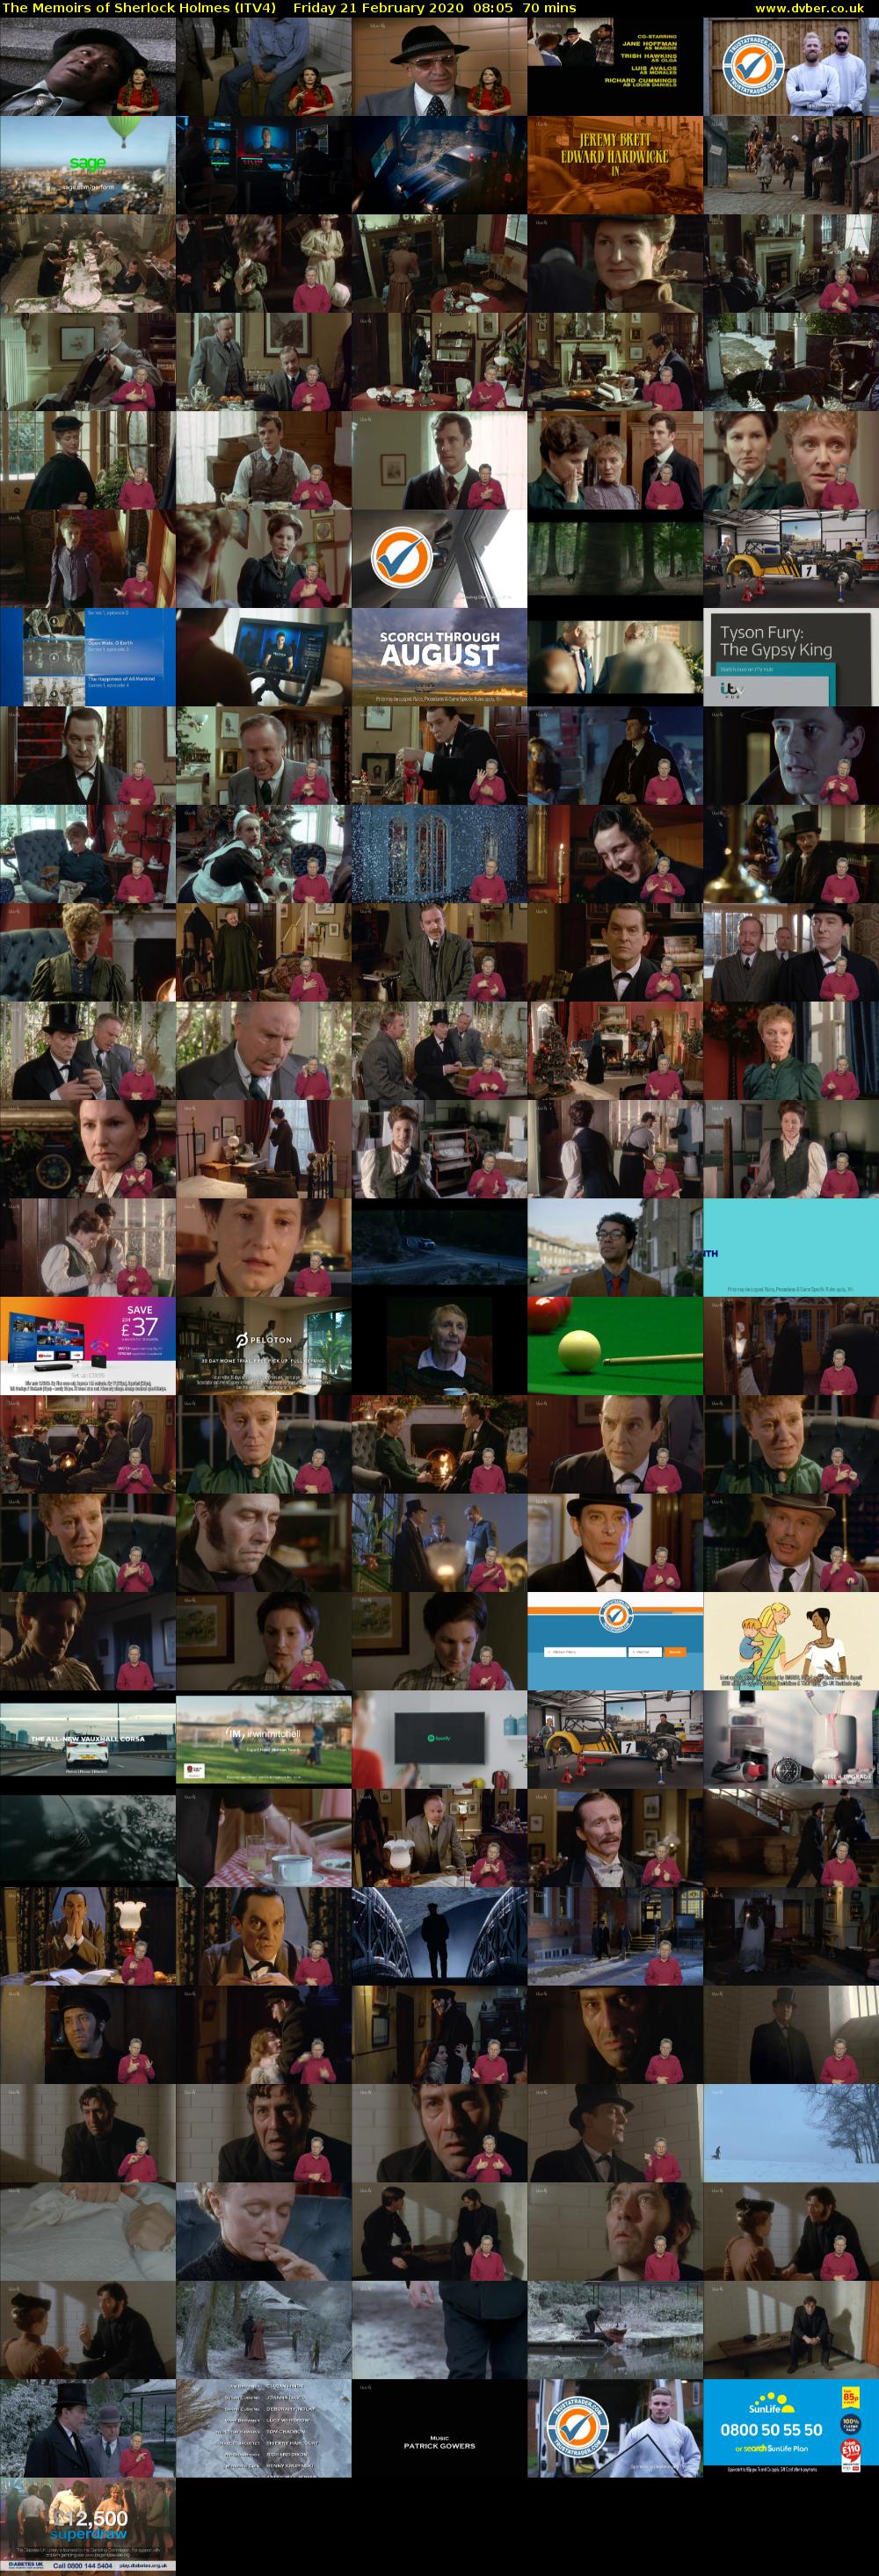 The Memoirs of Sherlock Holmes (ITV4) Friday 21 February 2020 08:05 - 09:15